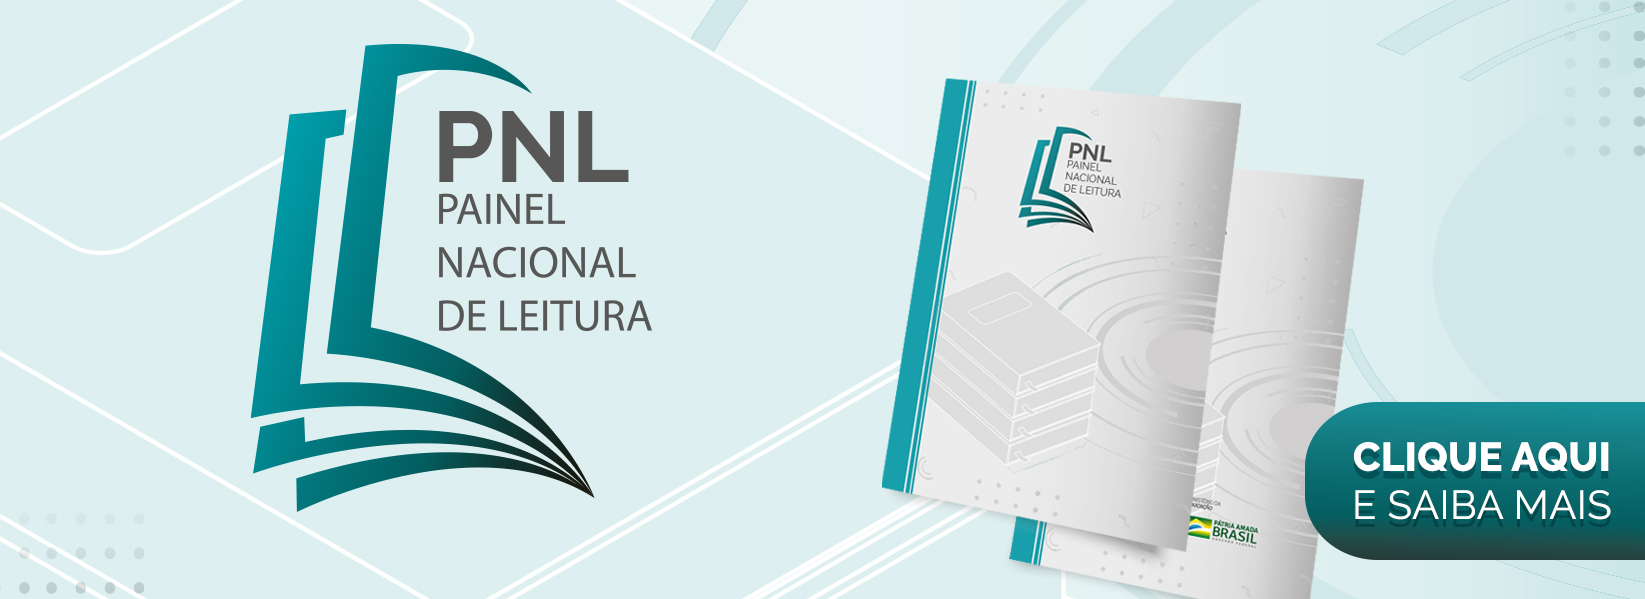 Banner PNL - Painel Nacional de Leitura